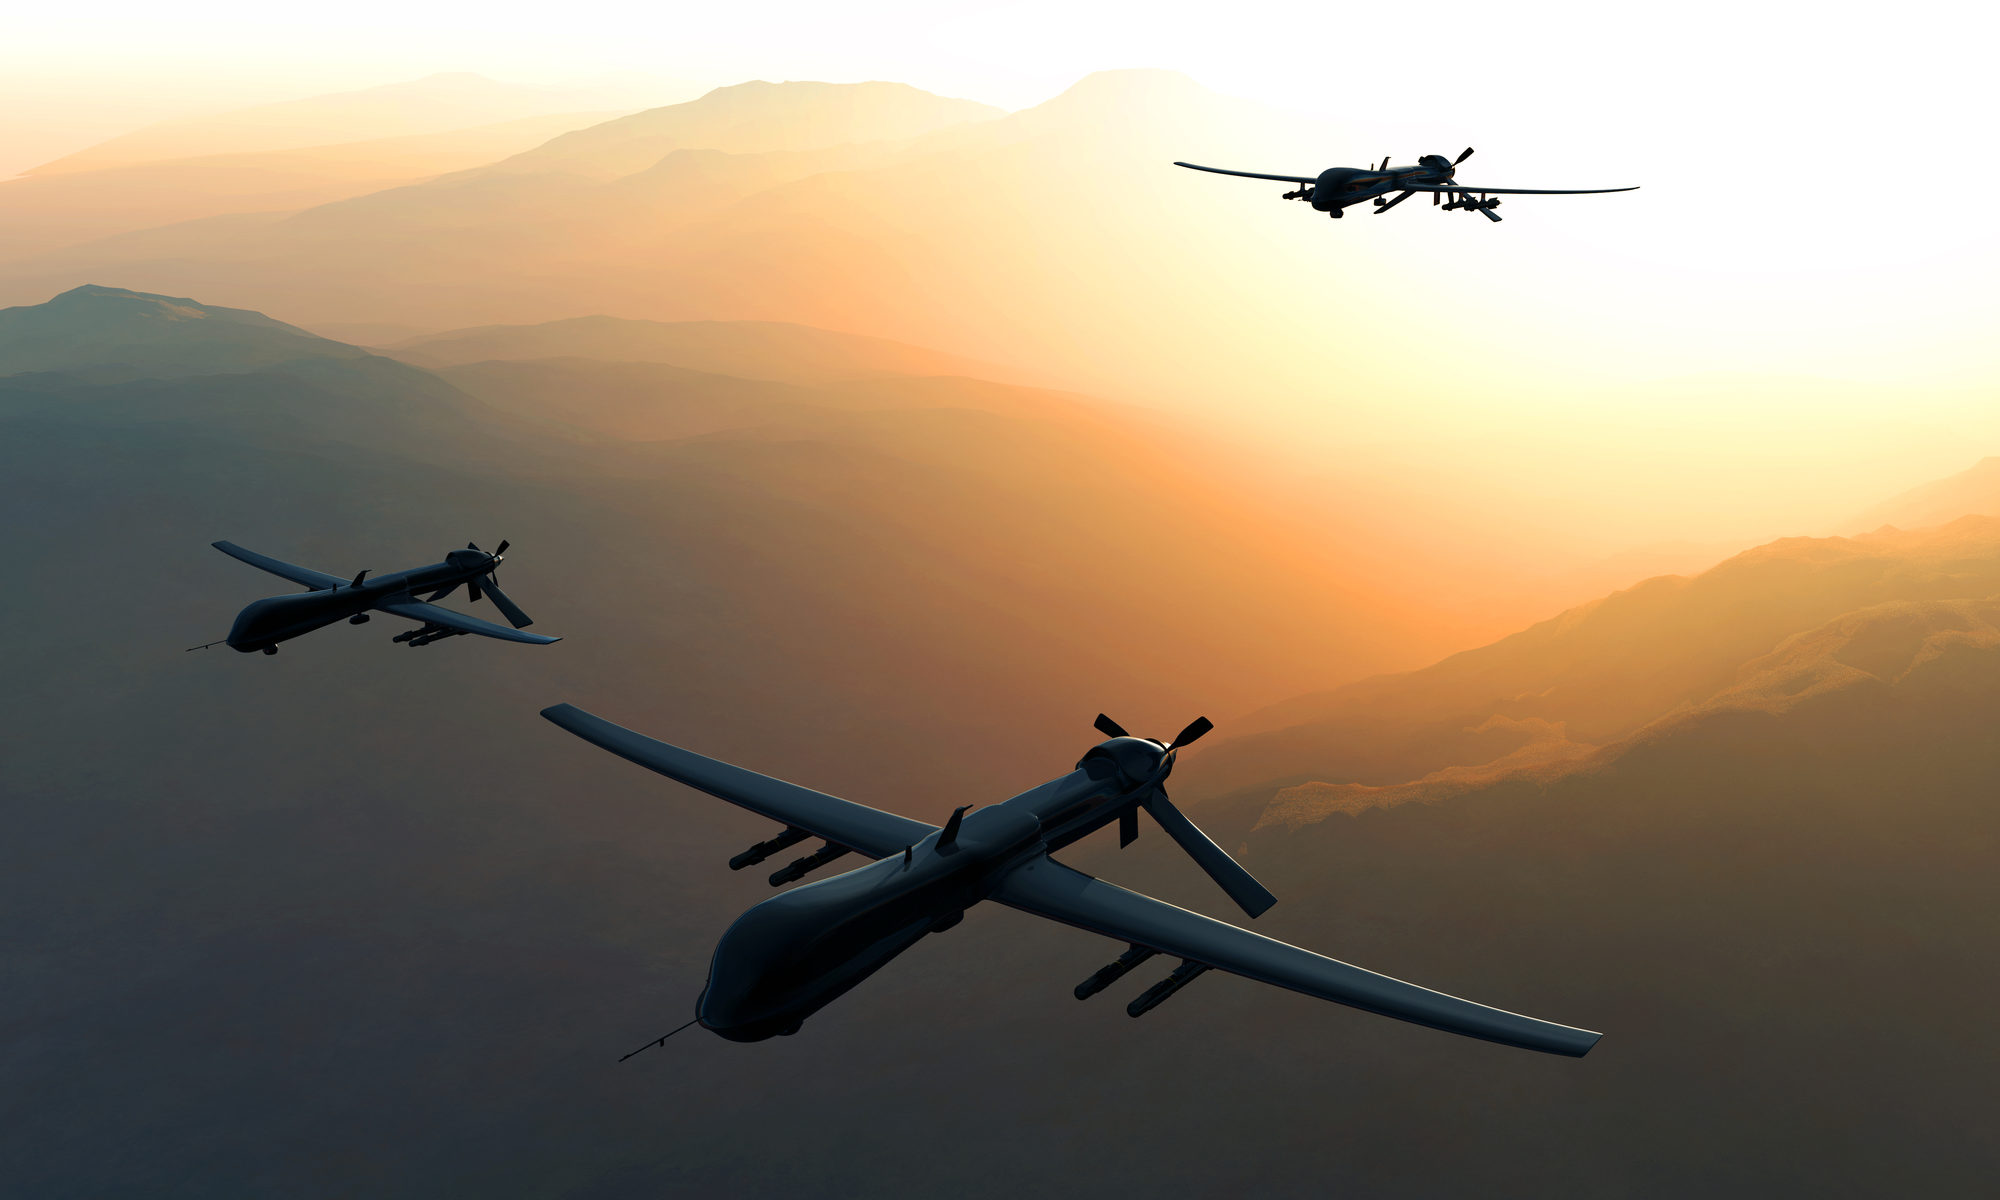 image of predator drones in formation